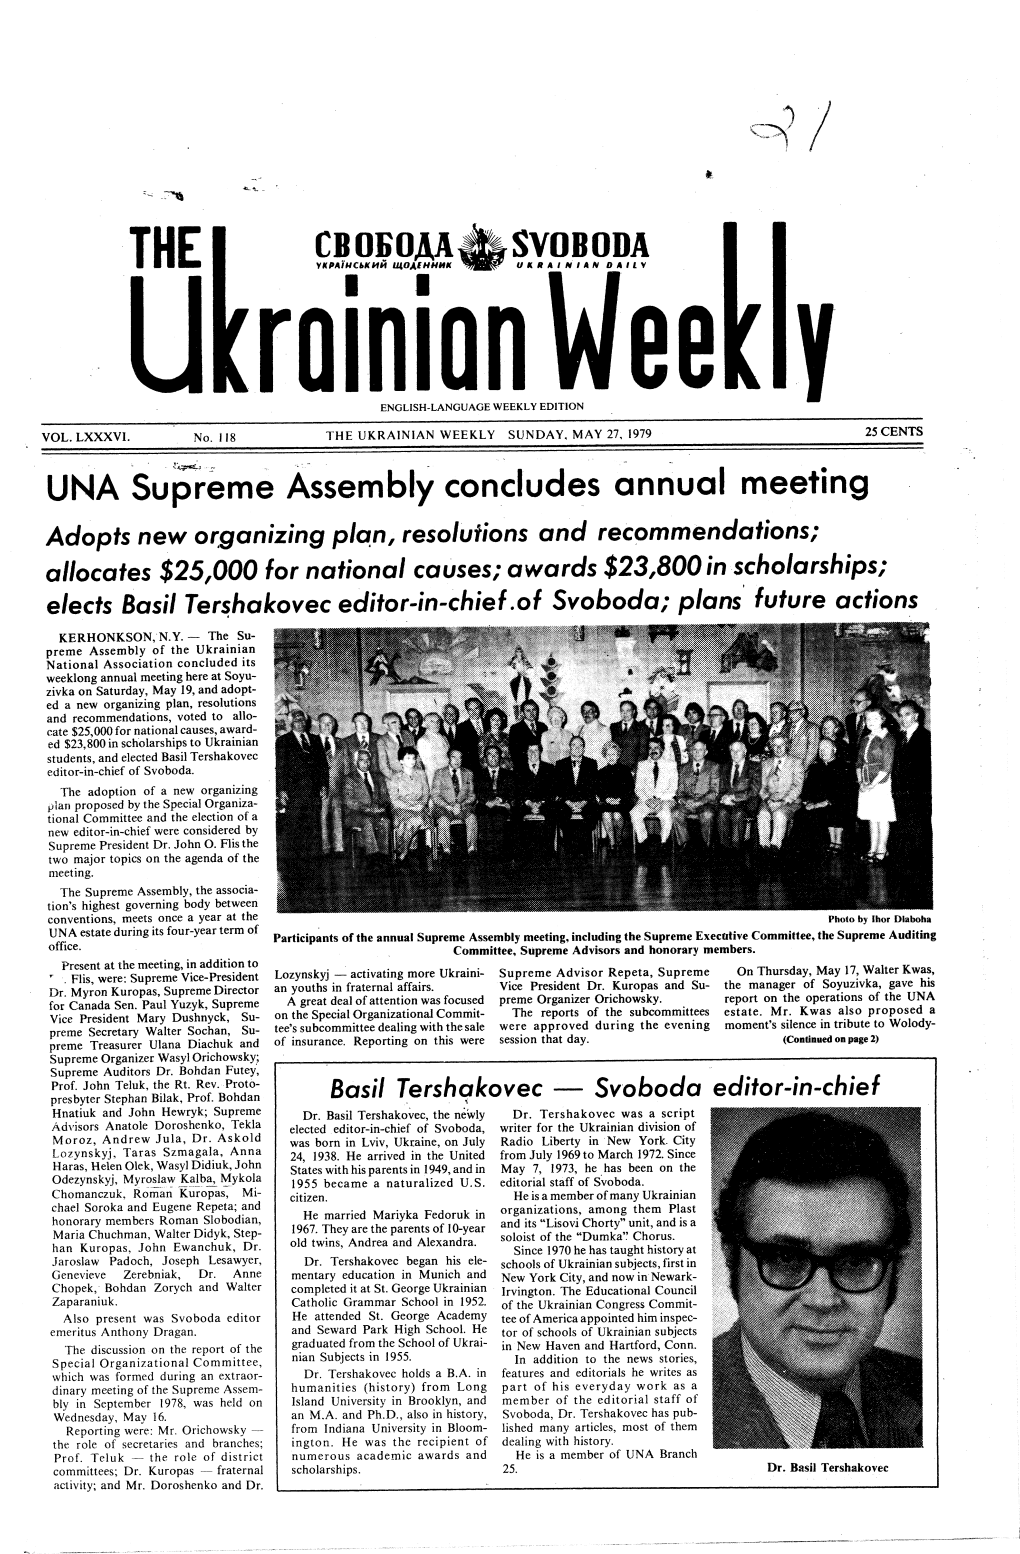 The Ukrainian Weekly 1979, No.21